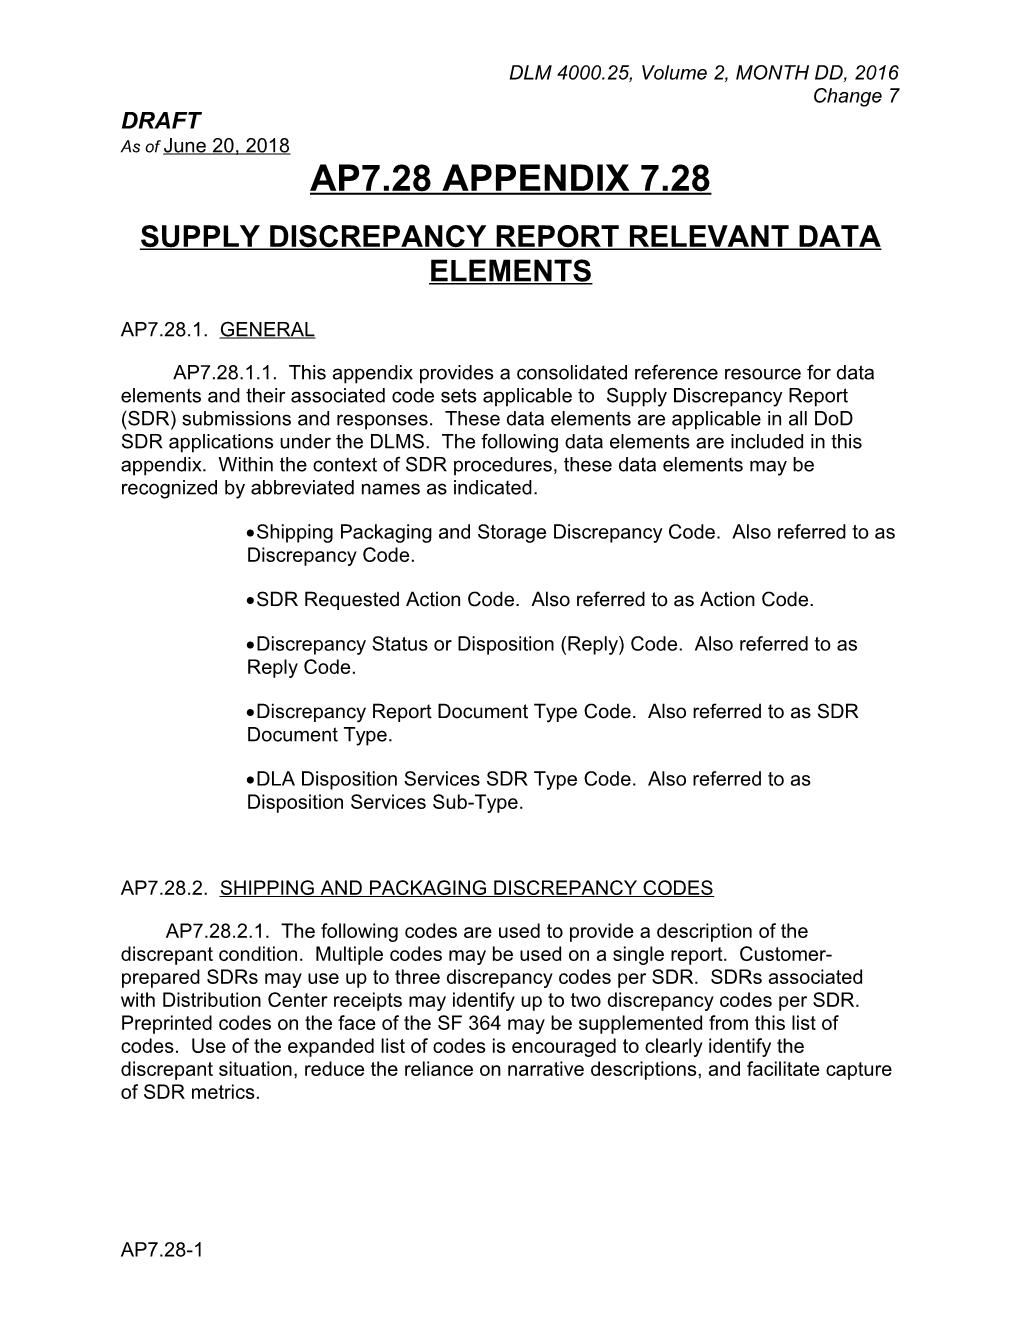 Appendix 7.28 - SDR Report Relevant Data Elements